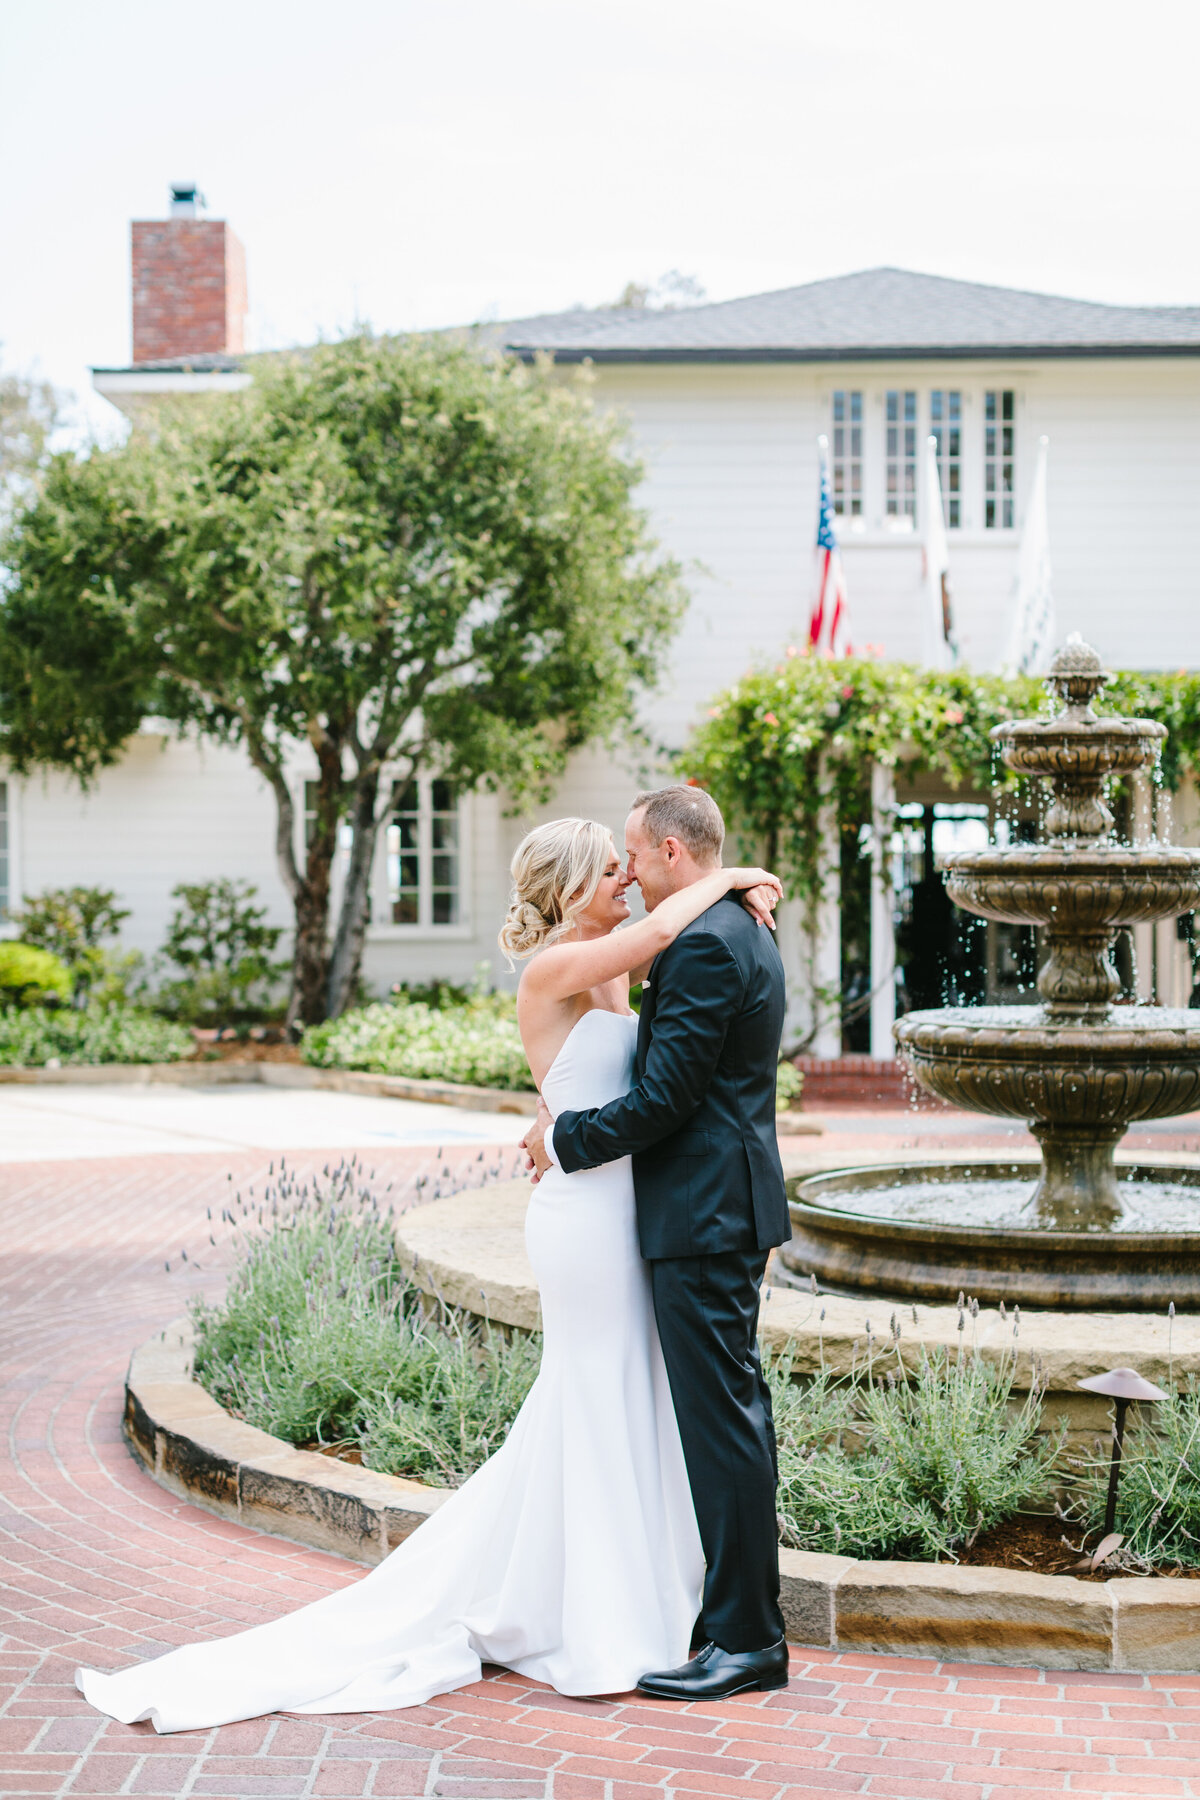 Best California and Texas Wedding Photographer-Jodee Friday & Co-524